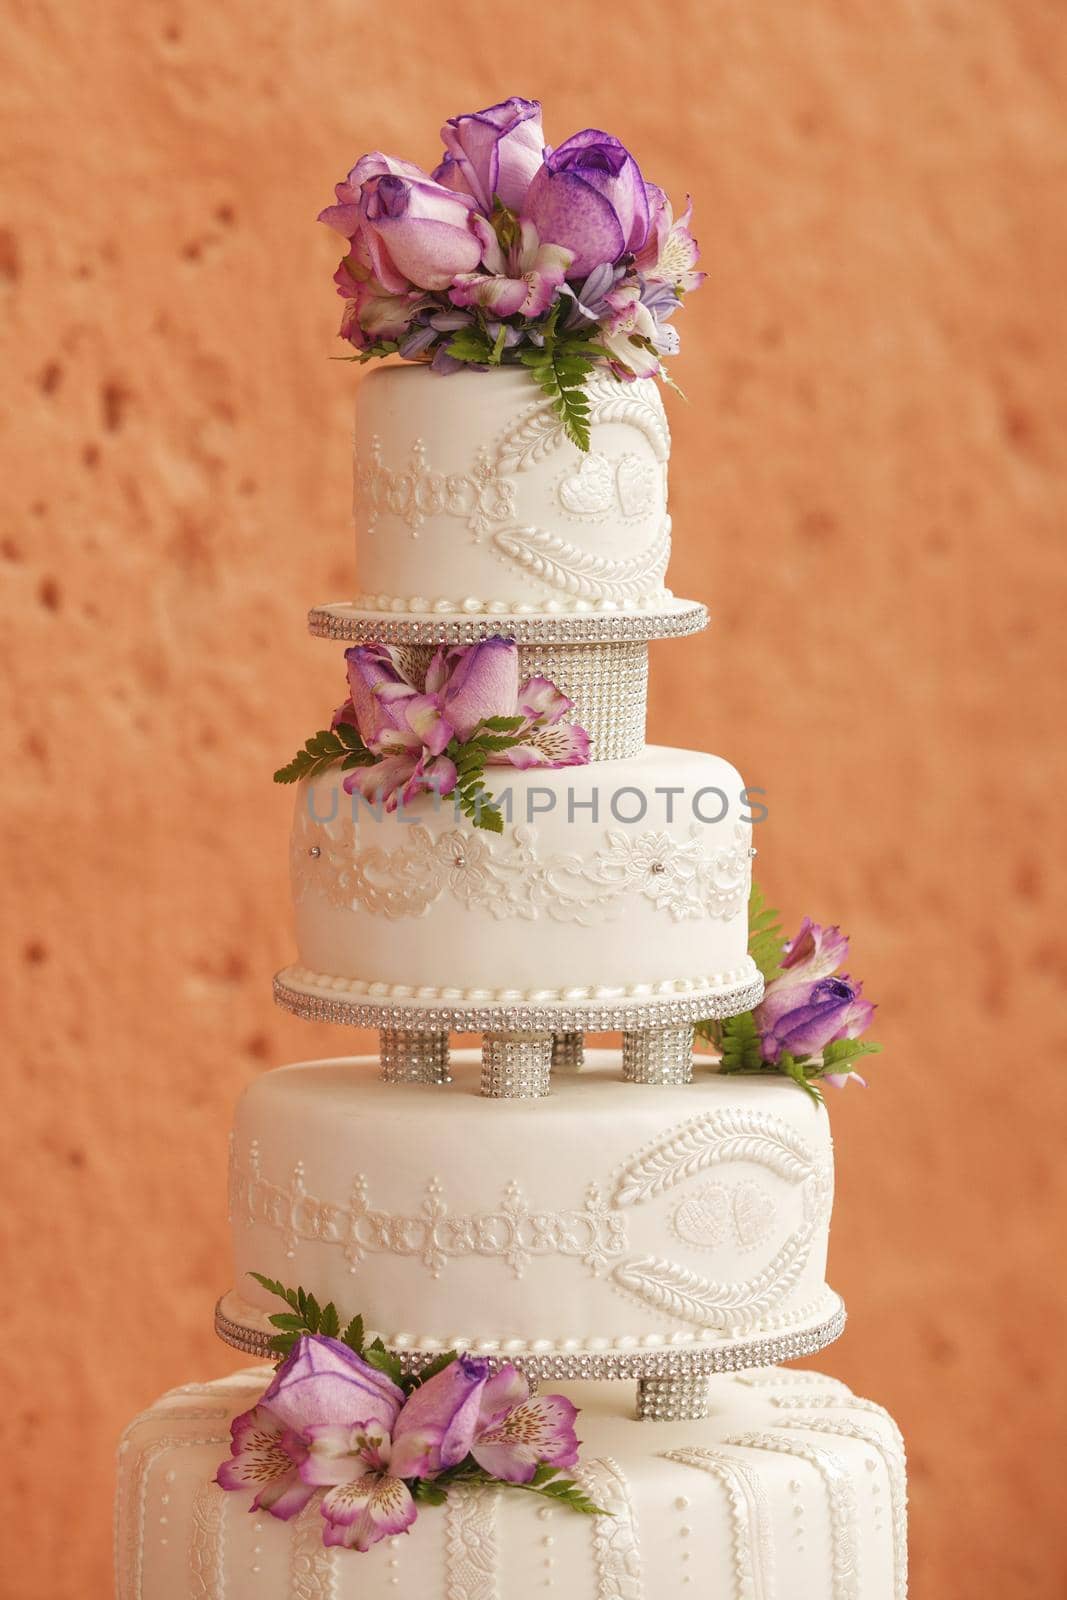 White wedding cake decorated with flowers by wondry